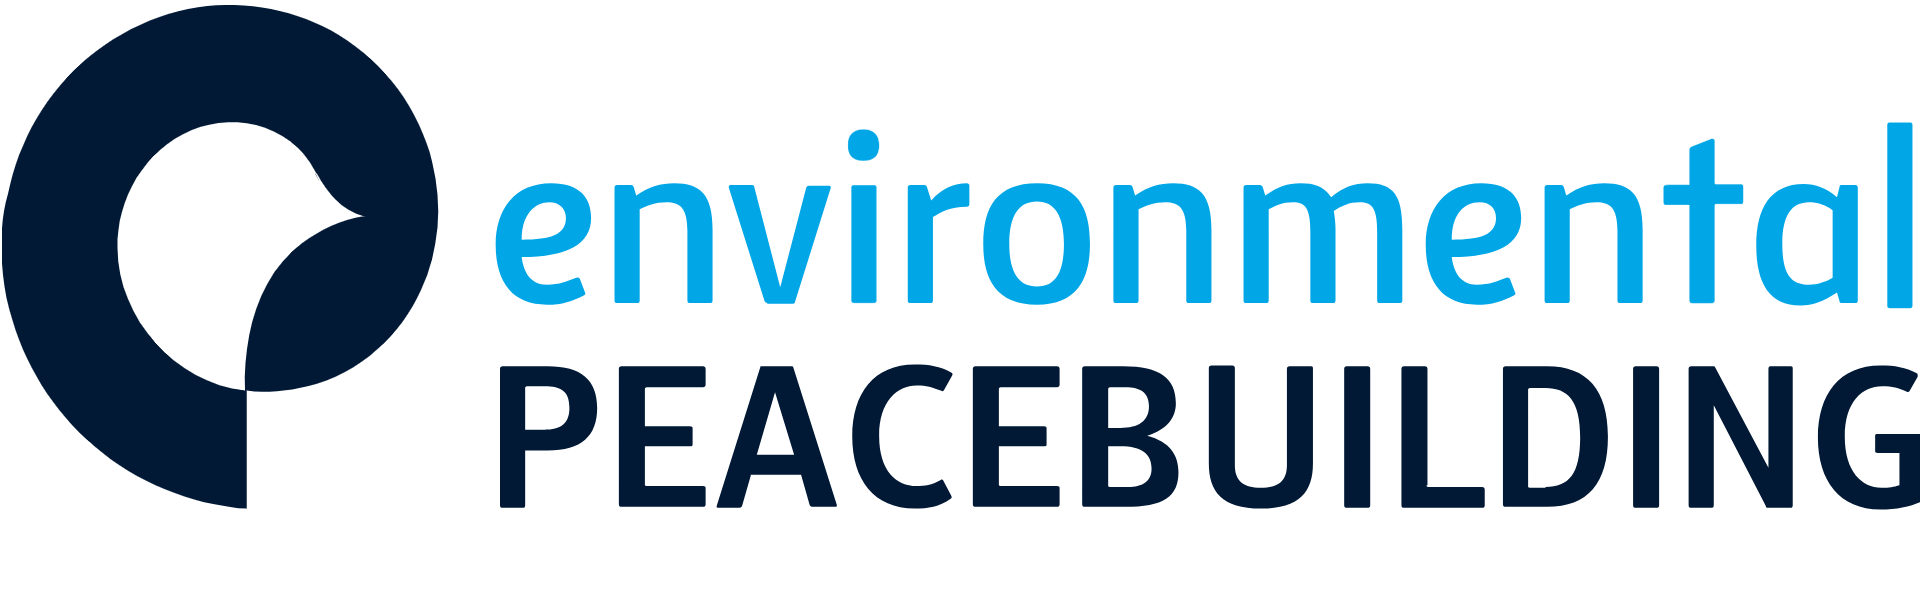 Environmental Peacebuilding logo